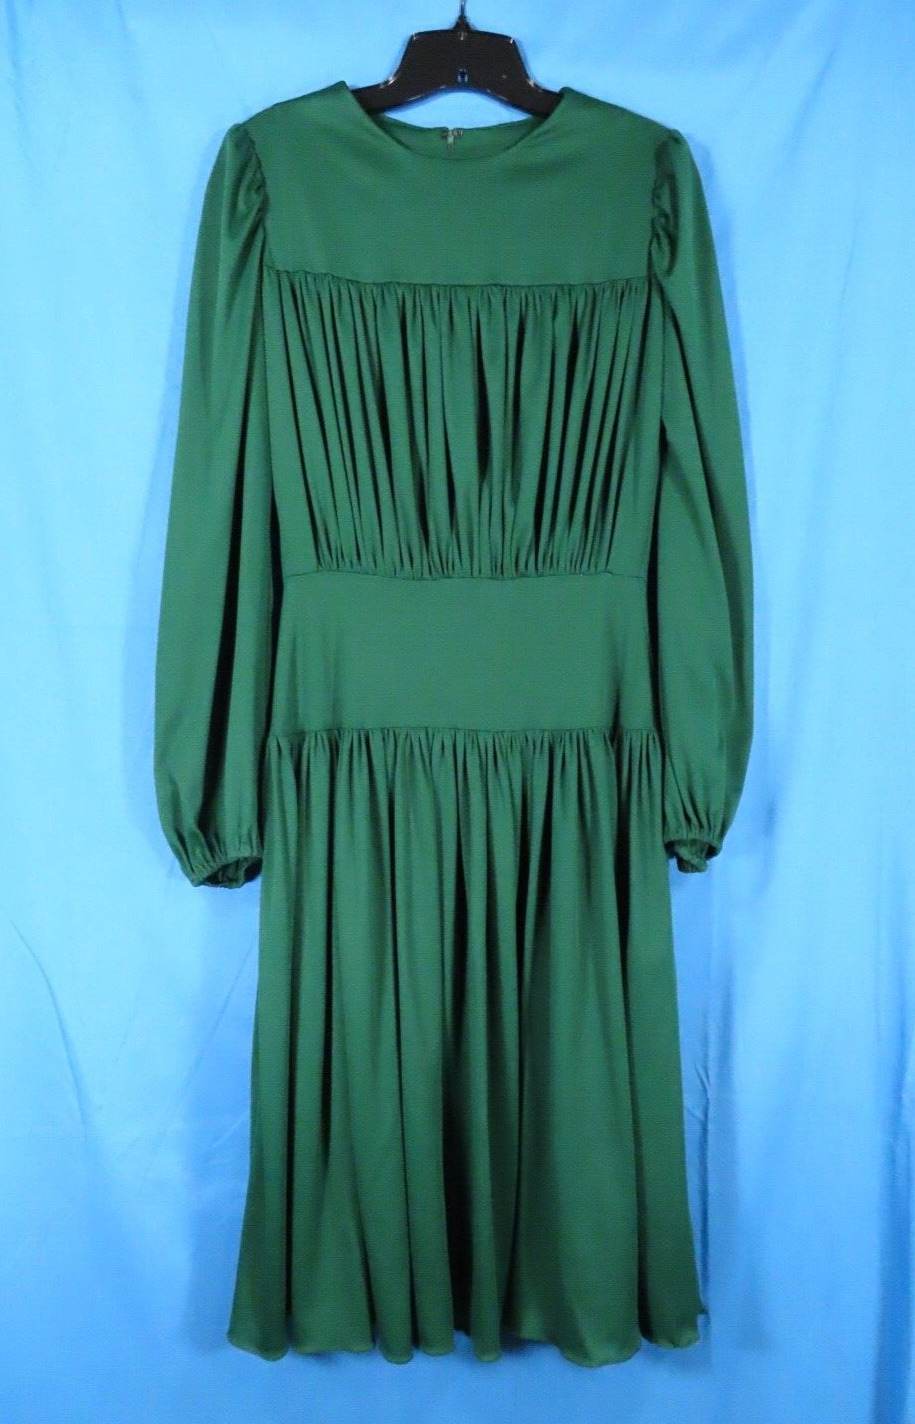 VTG Dark Emerald Green SILKY KNIT DRESS Dropped Waist Pleated FESTIVAL BOHO sz M